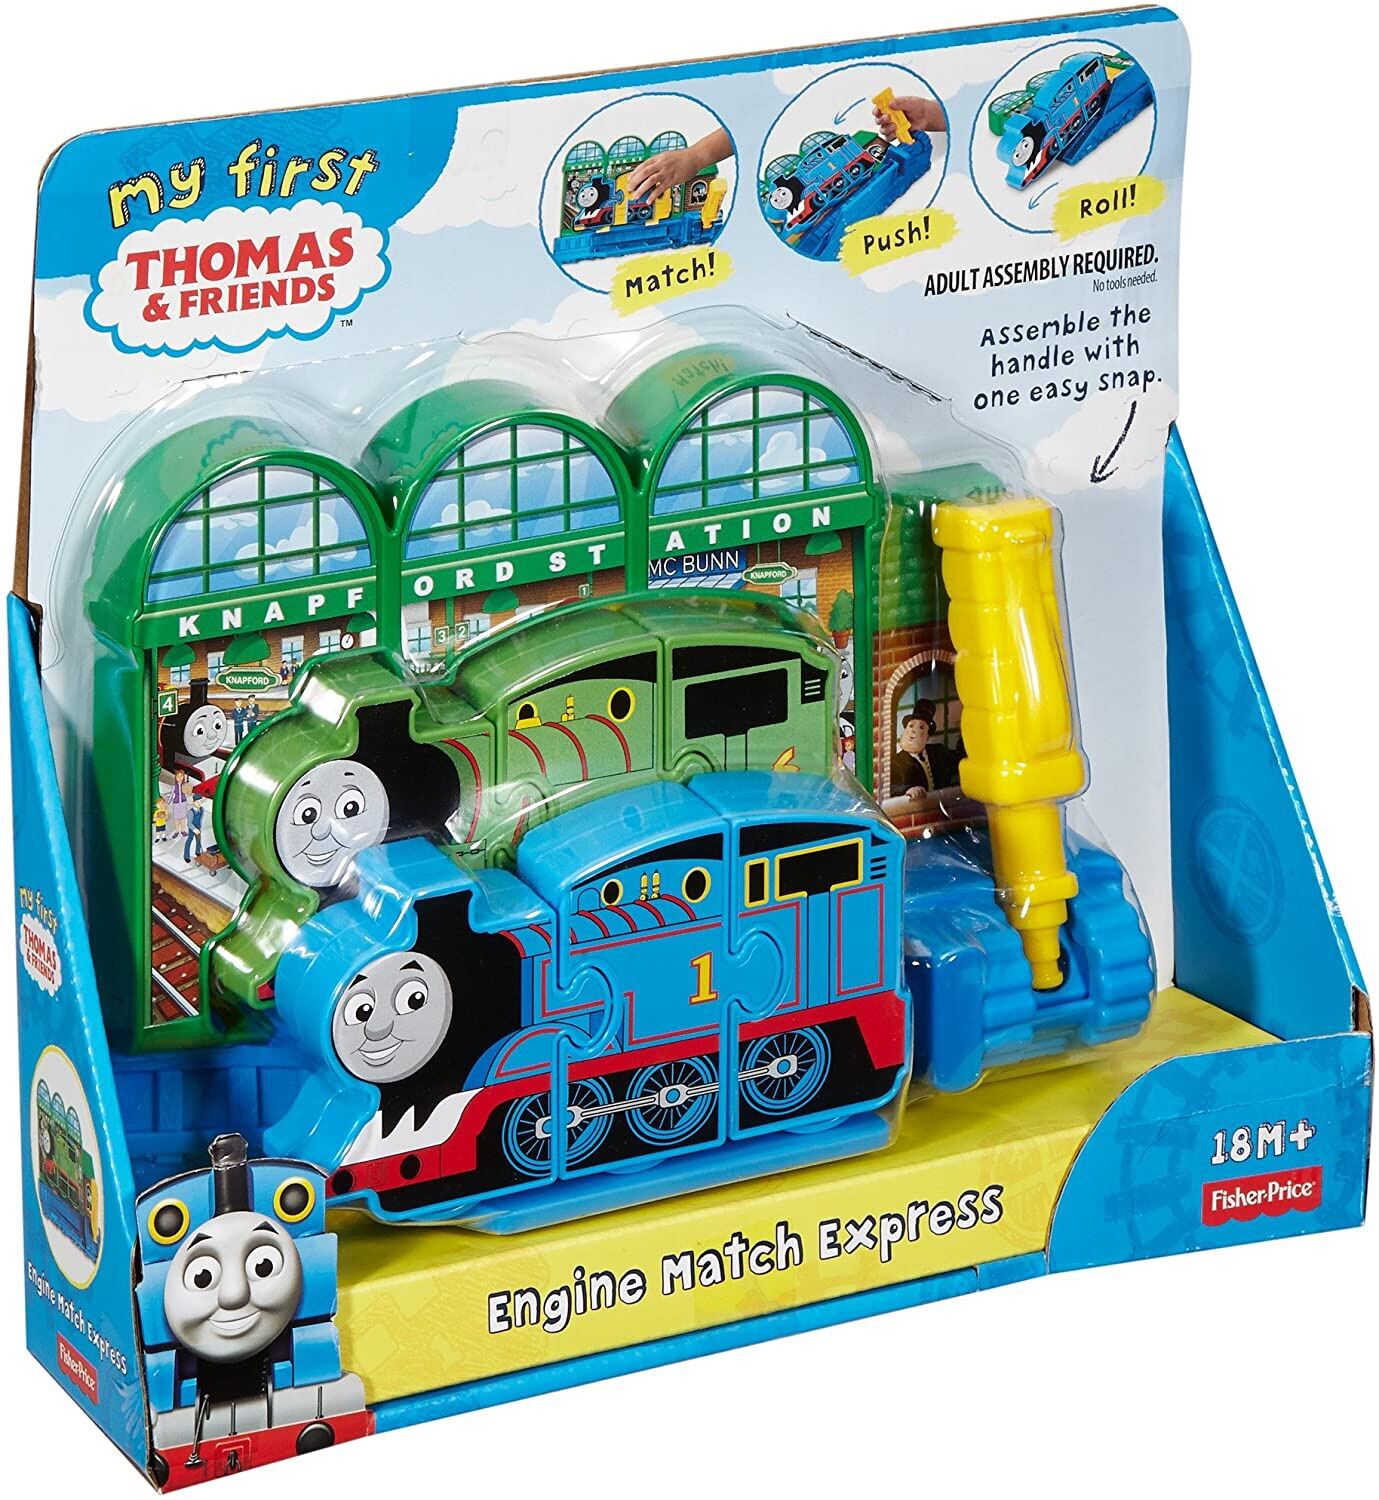 My First Thomas & Friends, Engine Match Express, 18m+ thumbnail